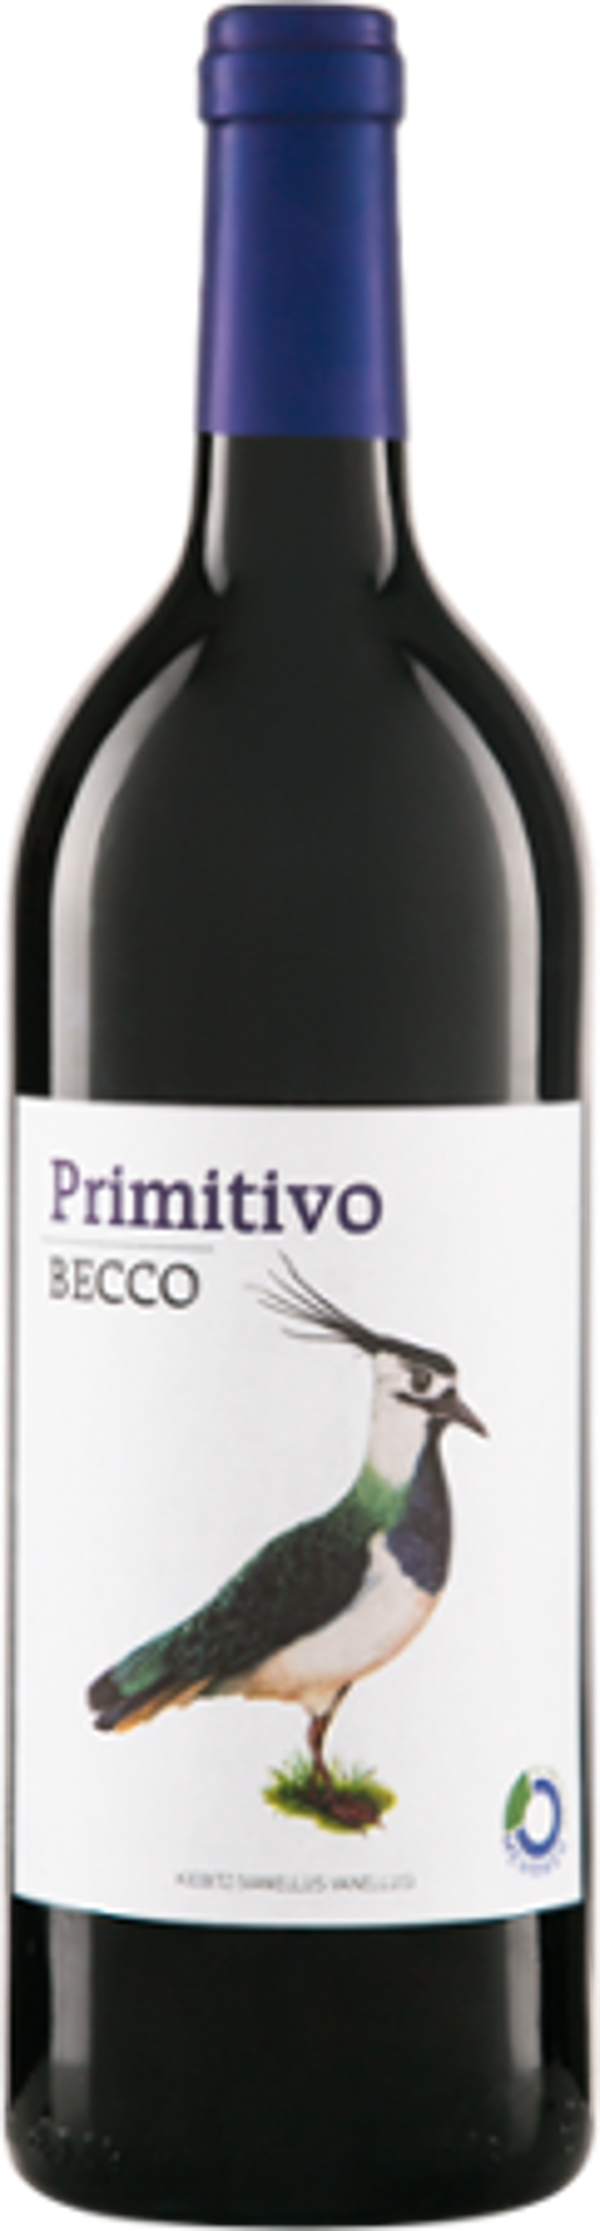 Produktfoto zu BECCO Primitivo IGT Puglia 202